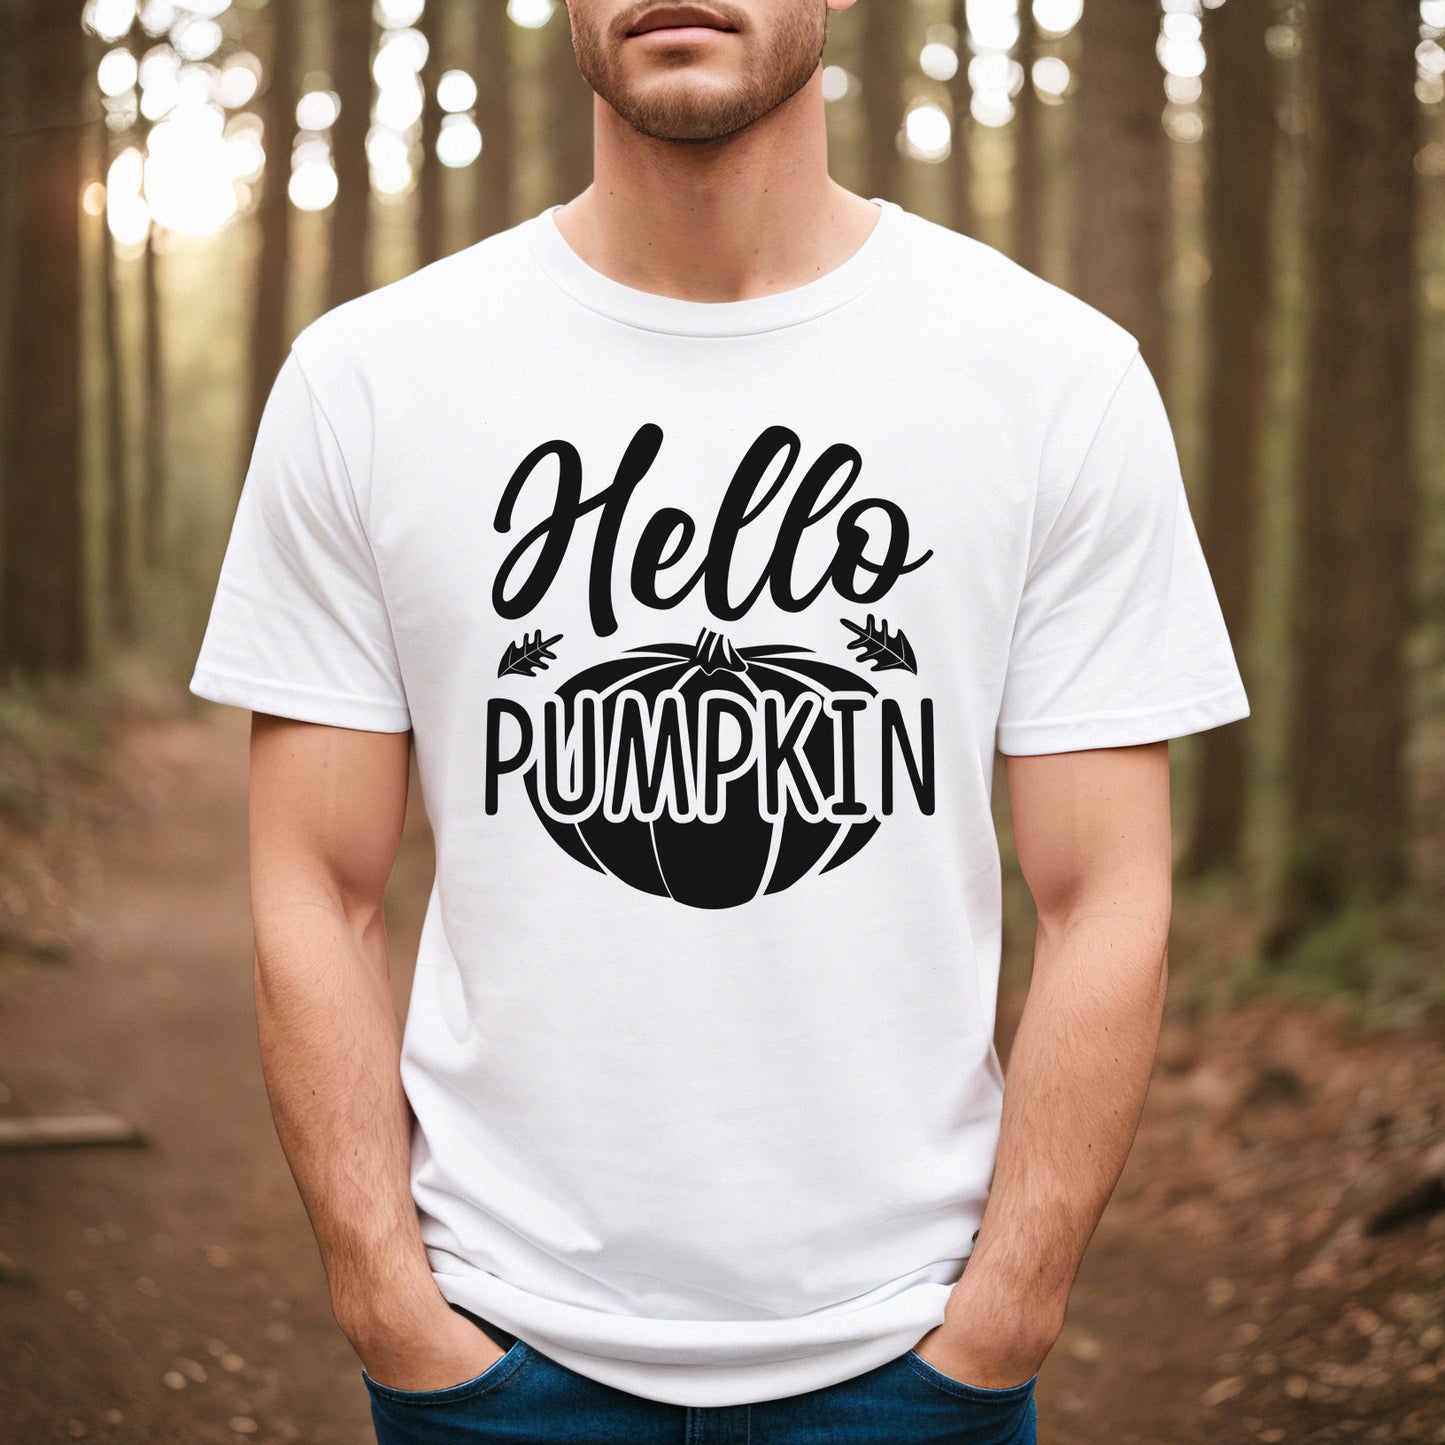 "Hello Pumpkin" Graphic